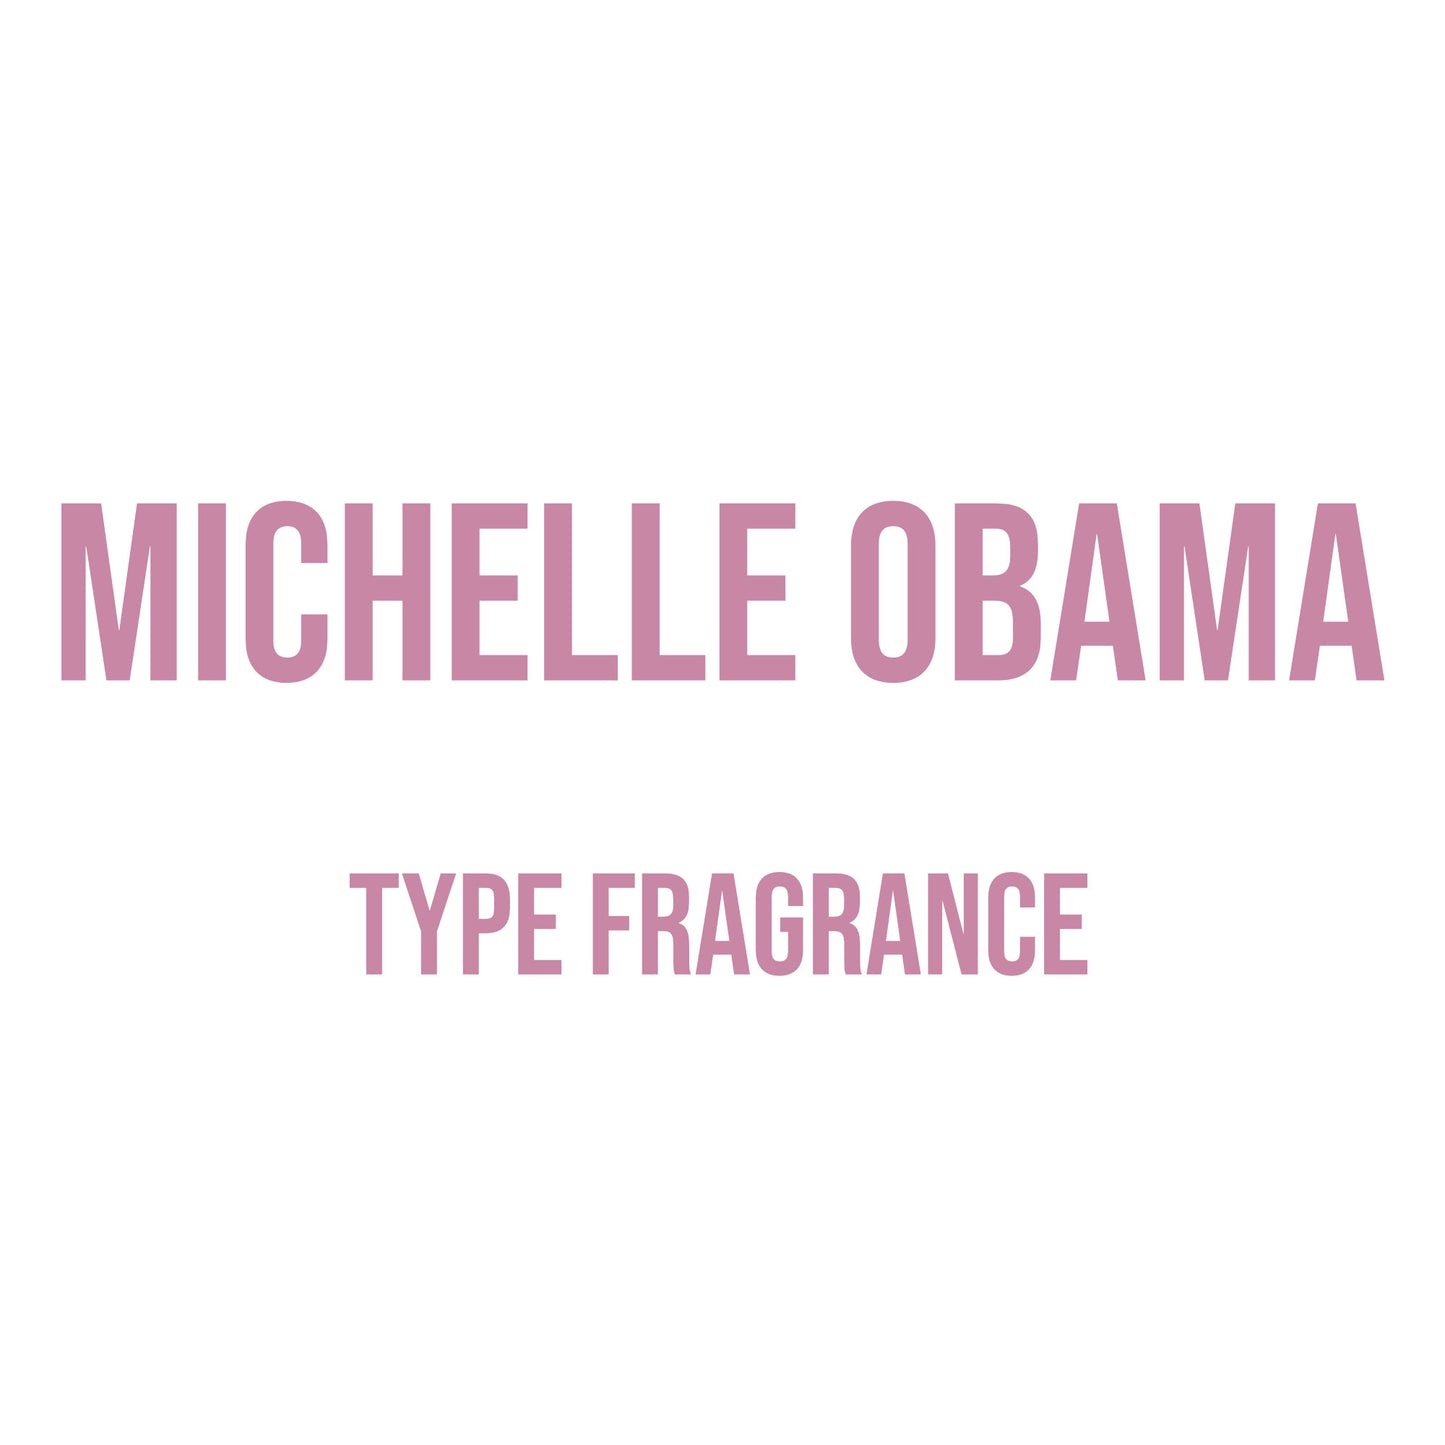 Michelle Obama Type Fragrance